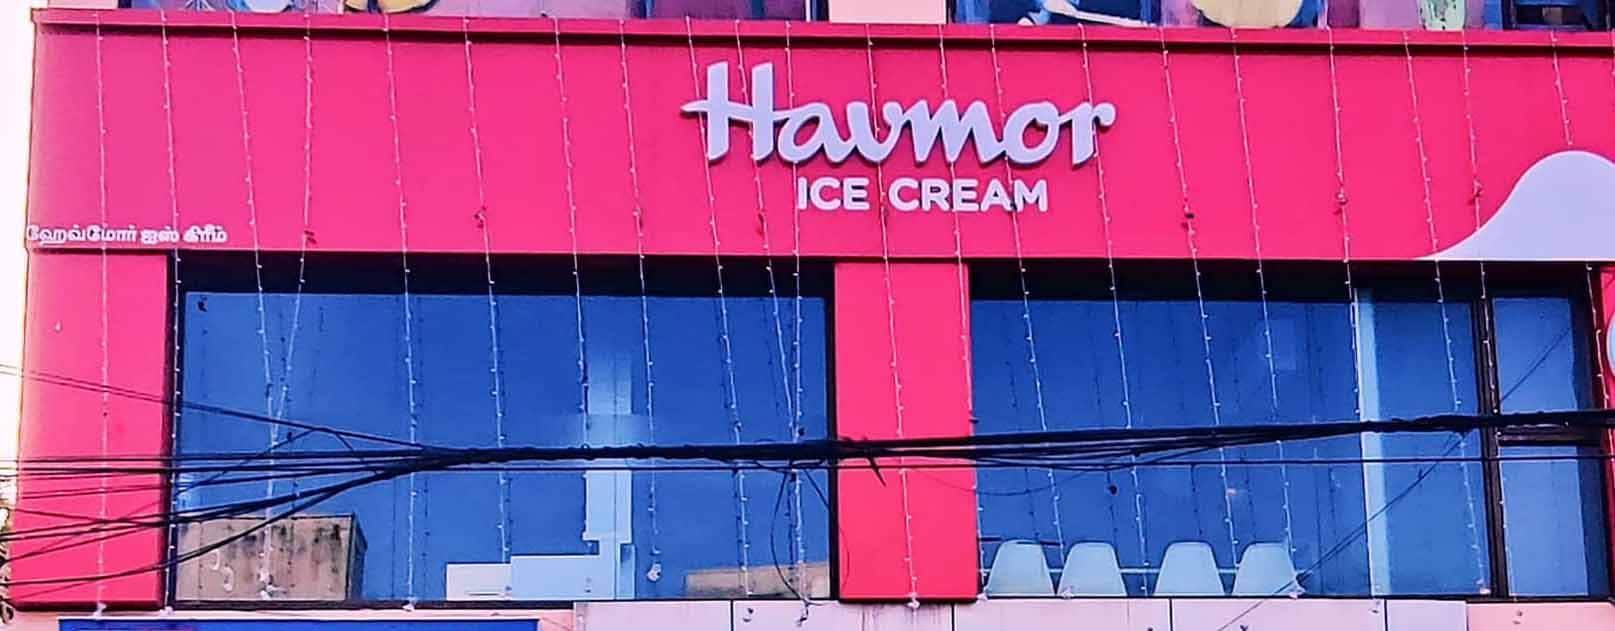 Havmor, Prahladnagar, Ahmedabad. - Picture of Havmor Ice Cream, Ahmedabad -  Tripadvisor